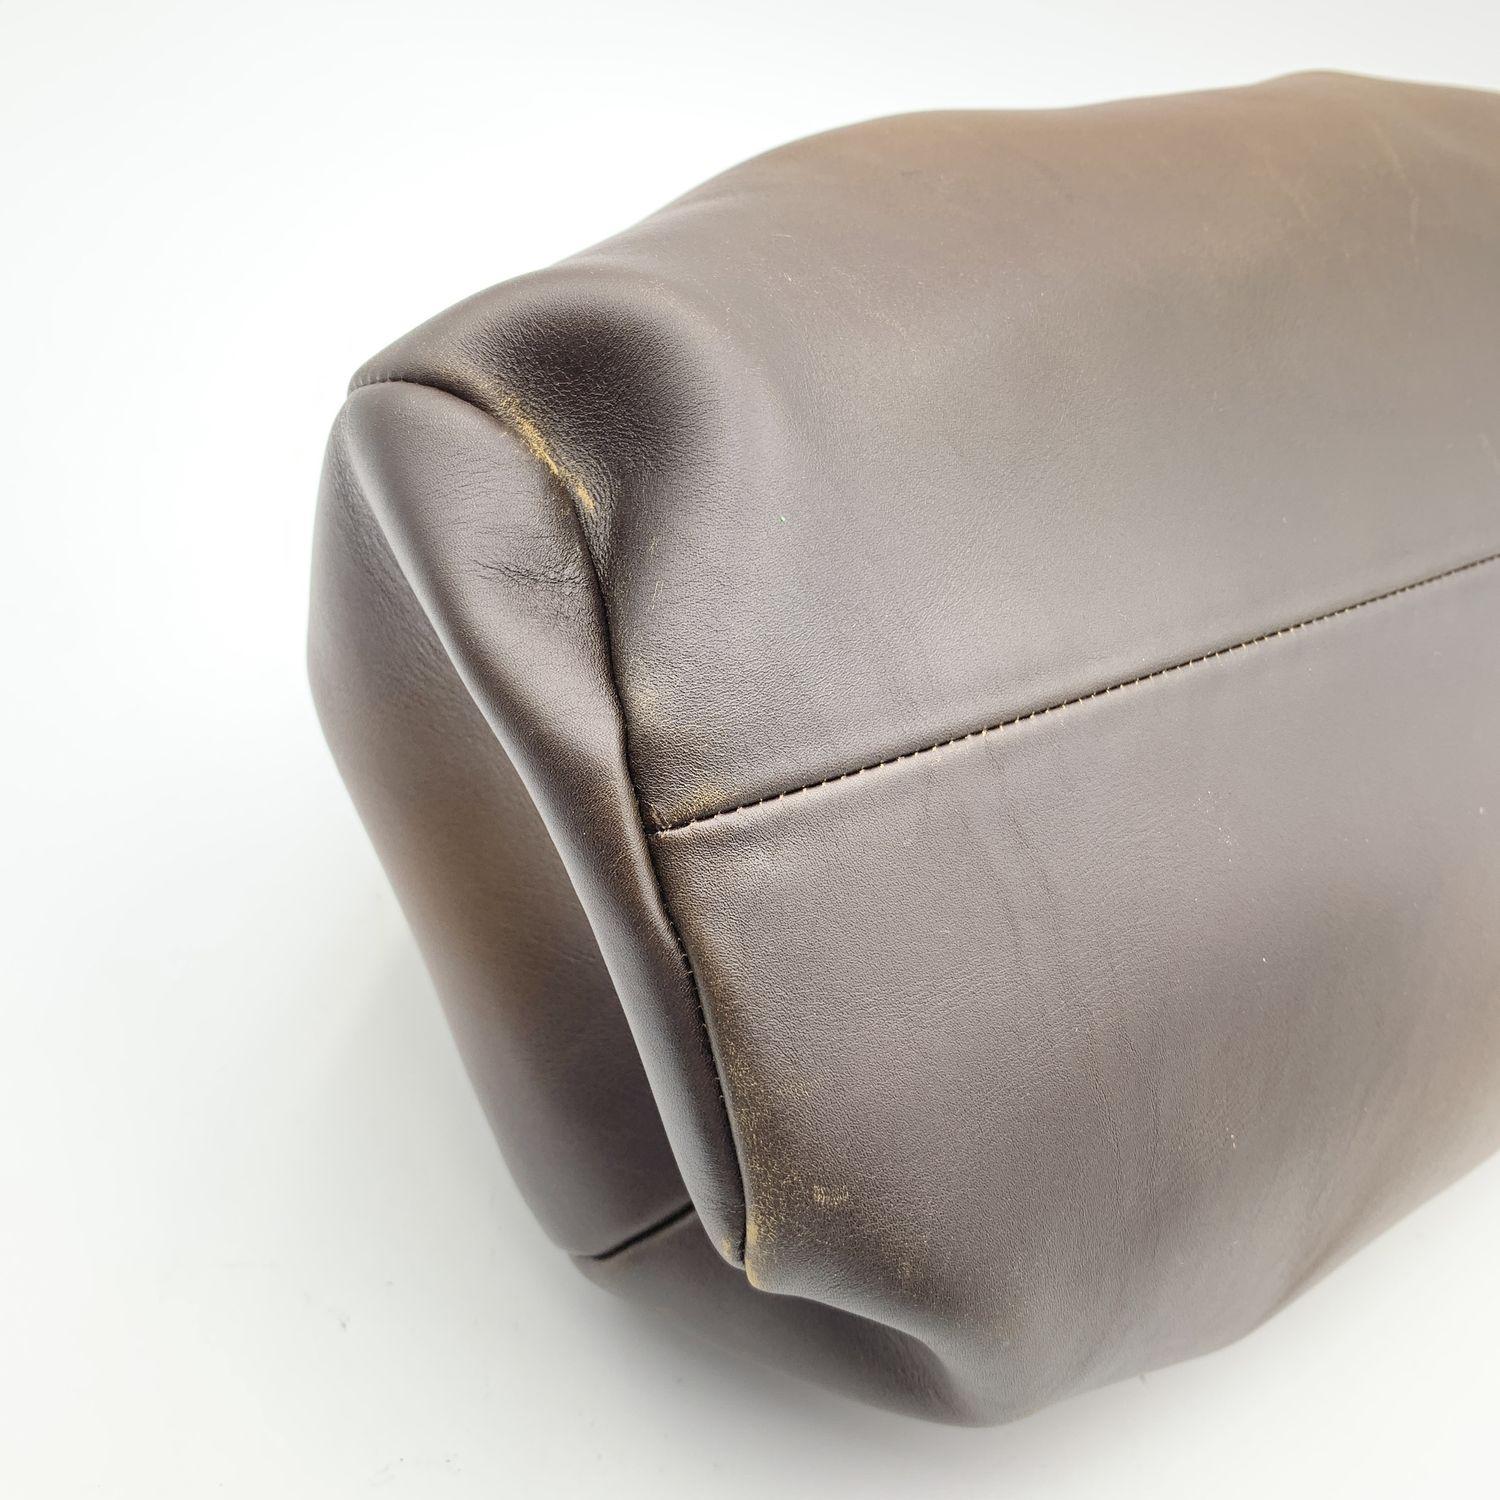 Gucci Brown Leather Wood Handles Bag Handbag Satchel For Sale 5